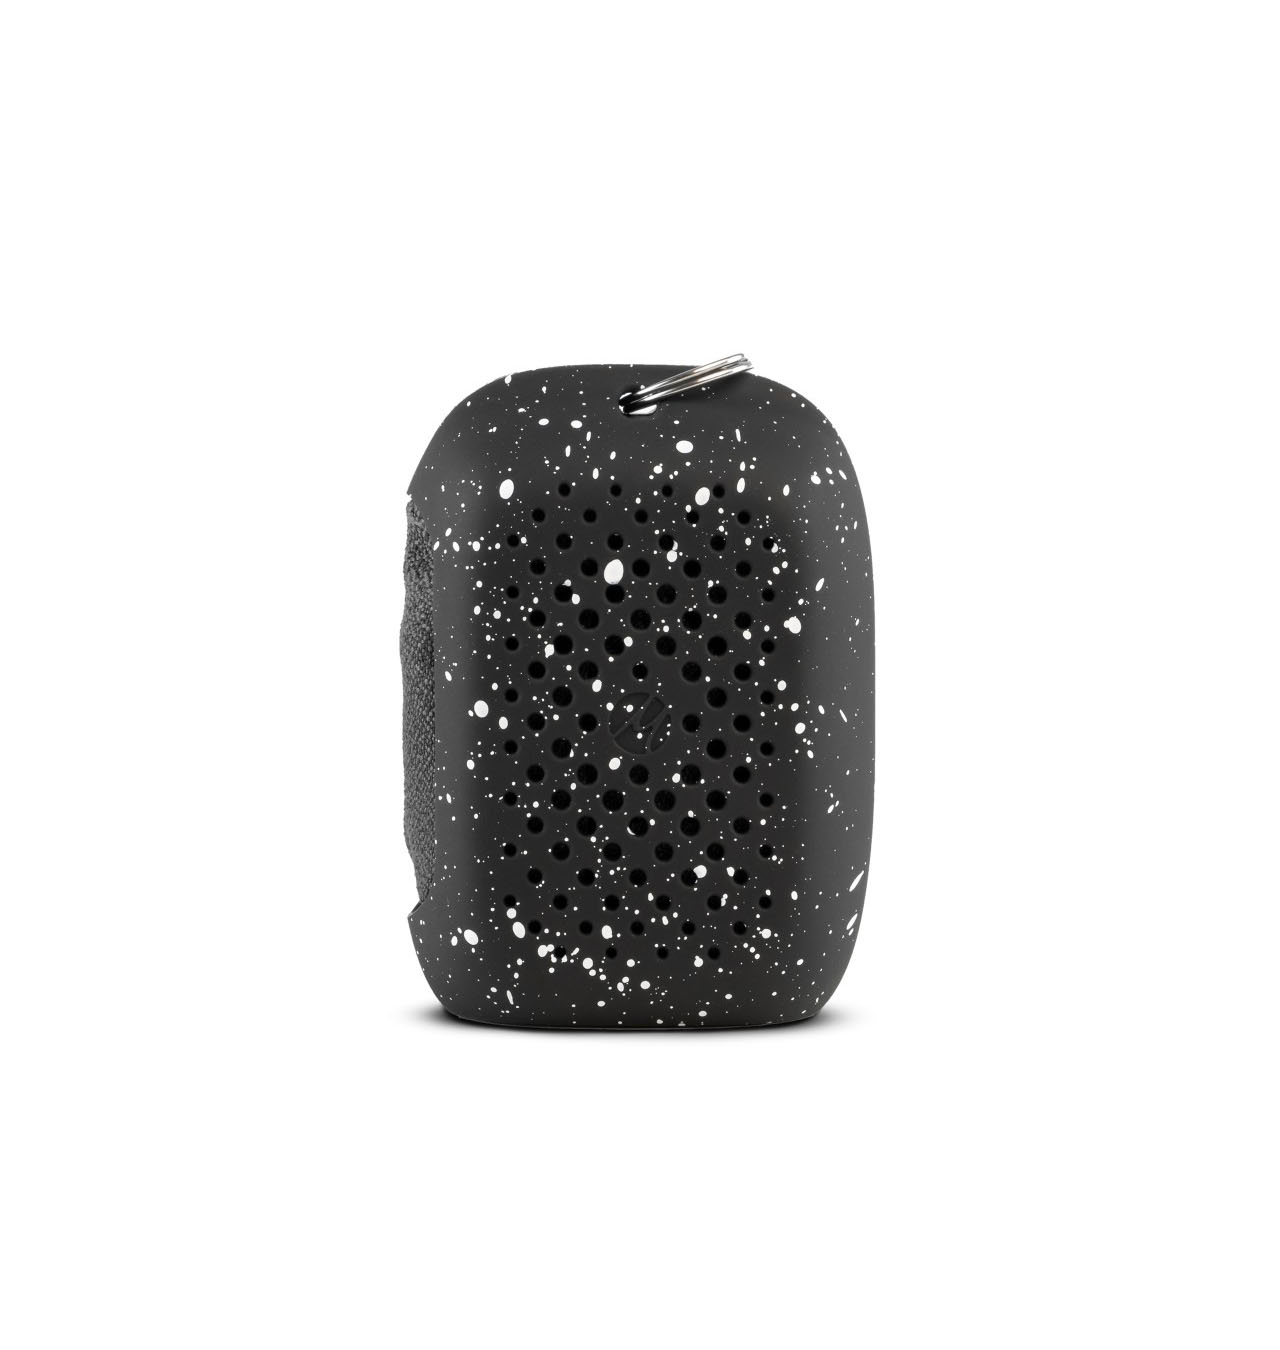 Matador - NanoDry Trek Towel Small - Black Granite